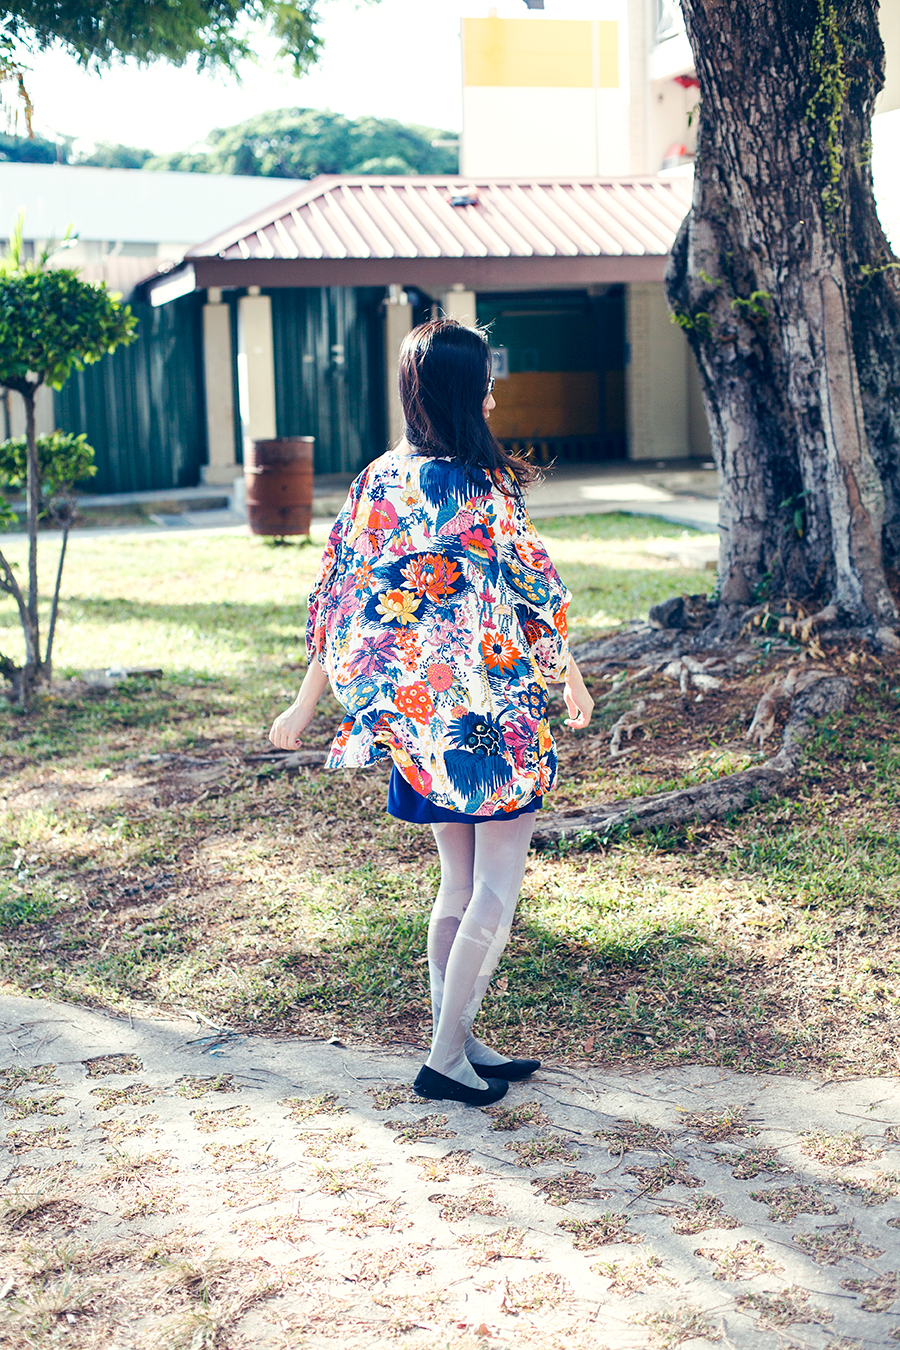 Moon Flowers outfit: DressLink floral kimono cardigan, Passport Love blue v-neck dress, Urban Outfitters moon landscape tights, Rubi black ballet flats, Gap black frame glasses, handmade cutlery earrings.